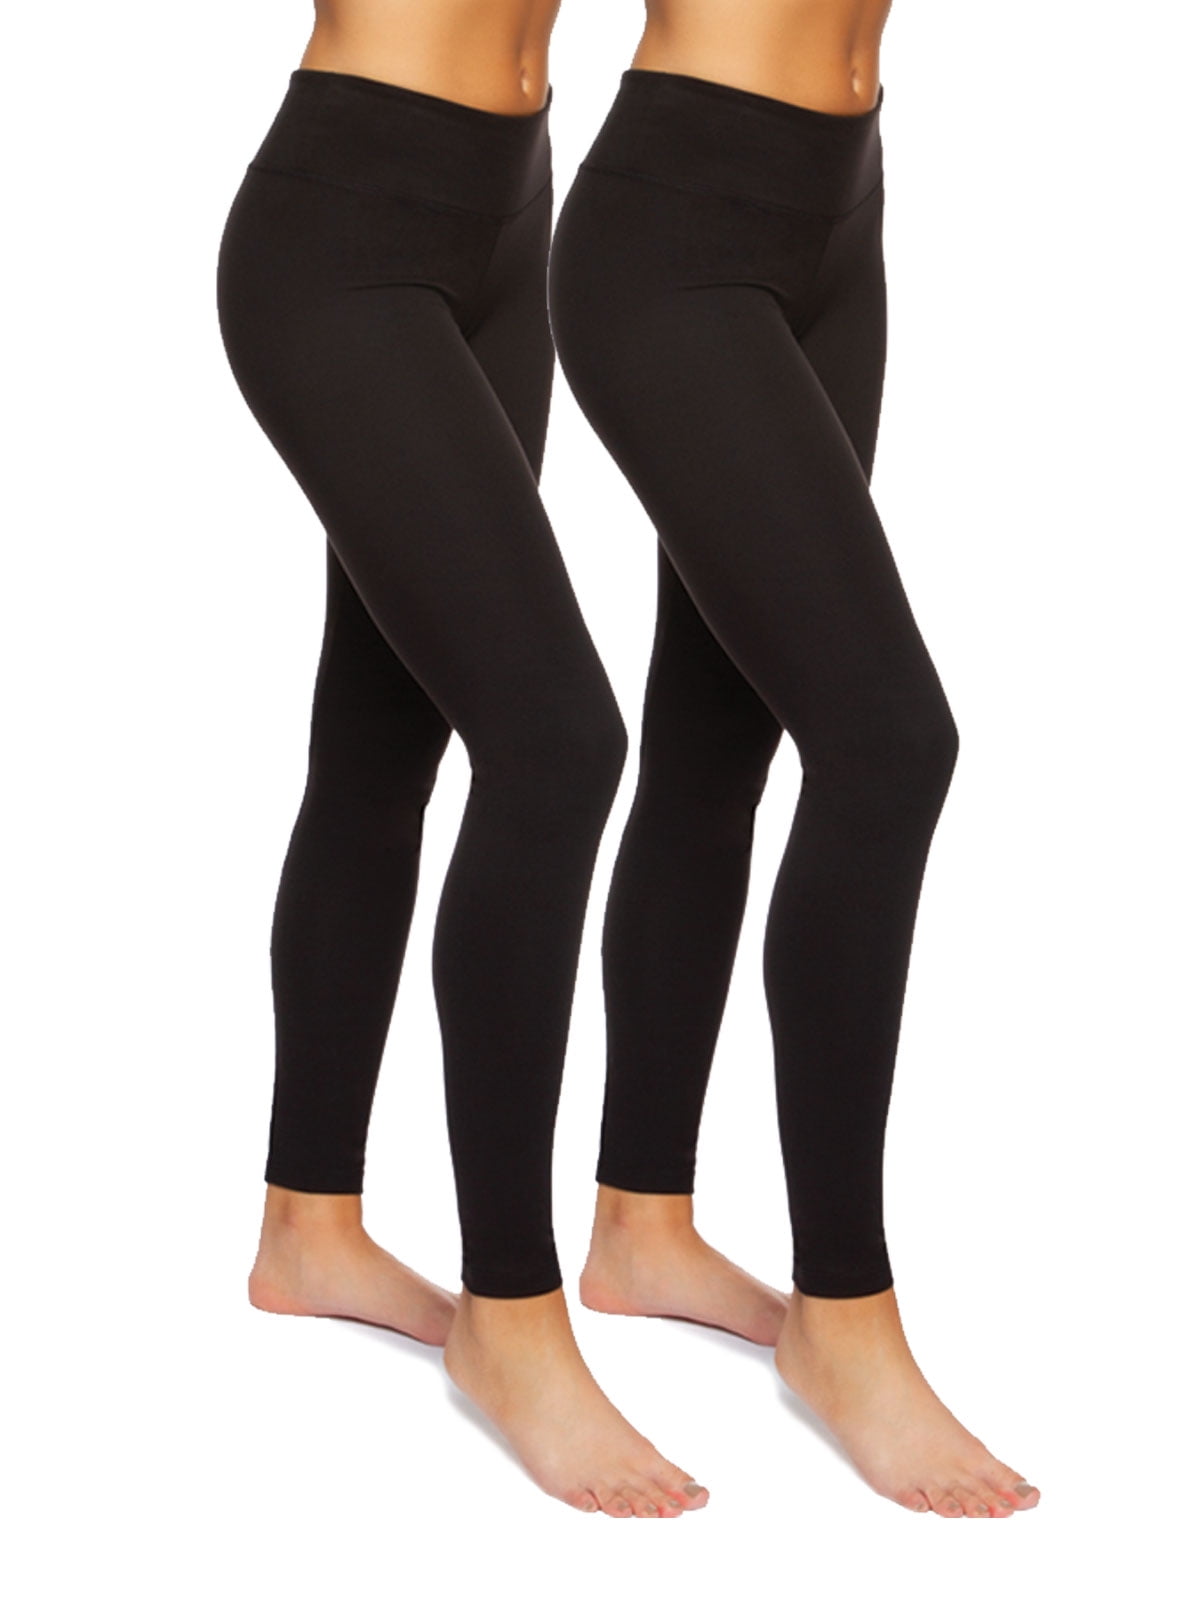 3 Pack Black, Light Grey, Mocha, One Size US 2-12 Gayhay High Waisted Leggings for Women Tummy Control Workout Running 4 Way Stretch Leggings- Reg & Plus Size